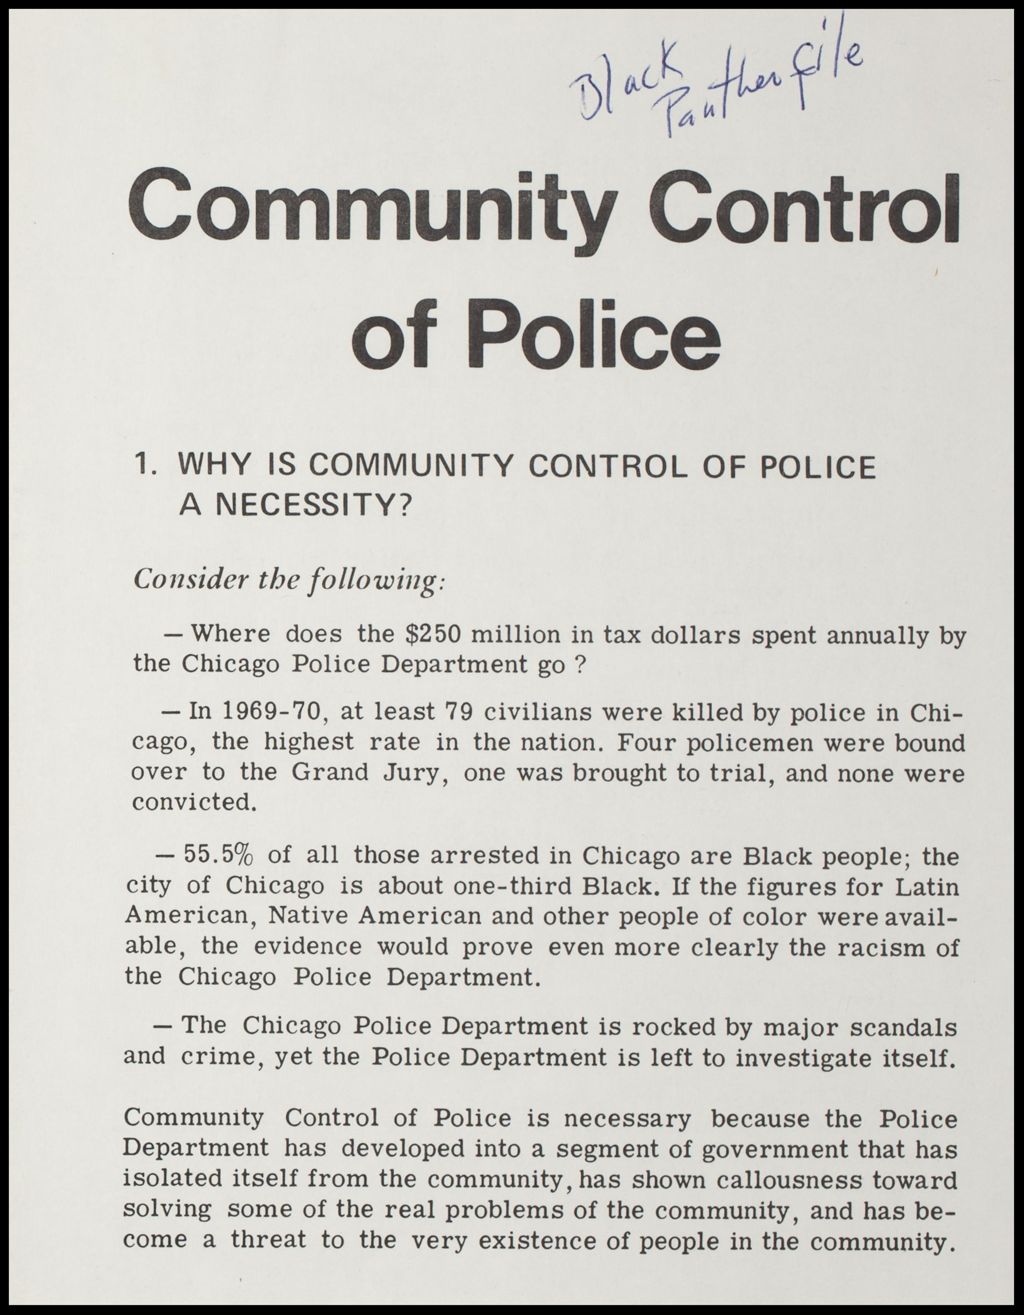 Community Control of Police (Folder IV-1308)